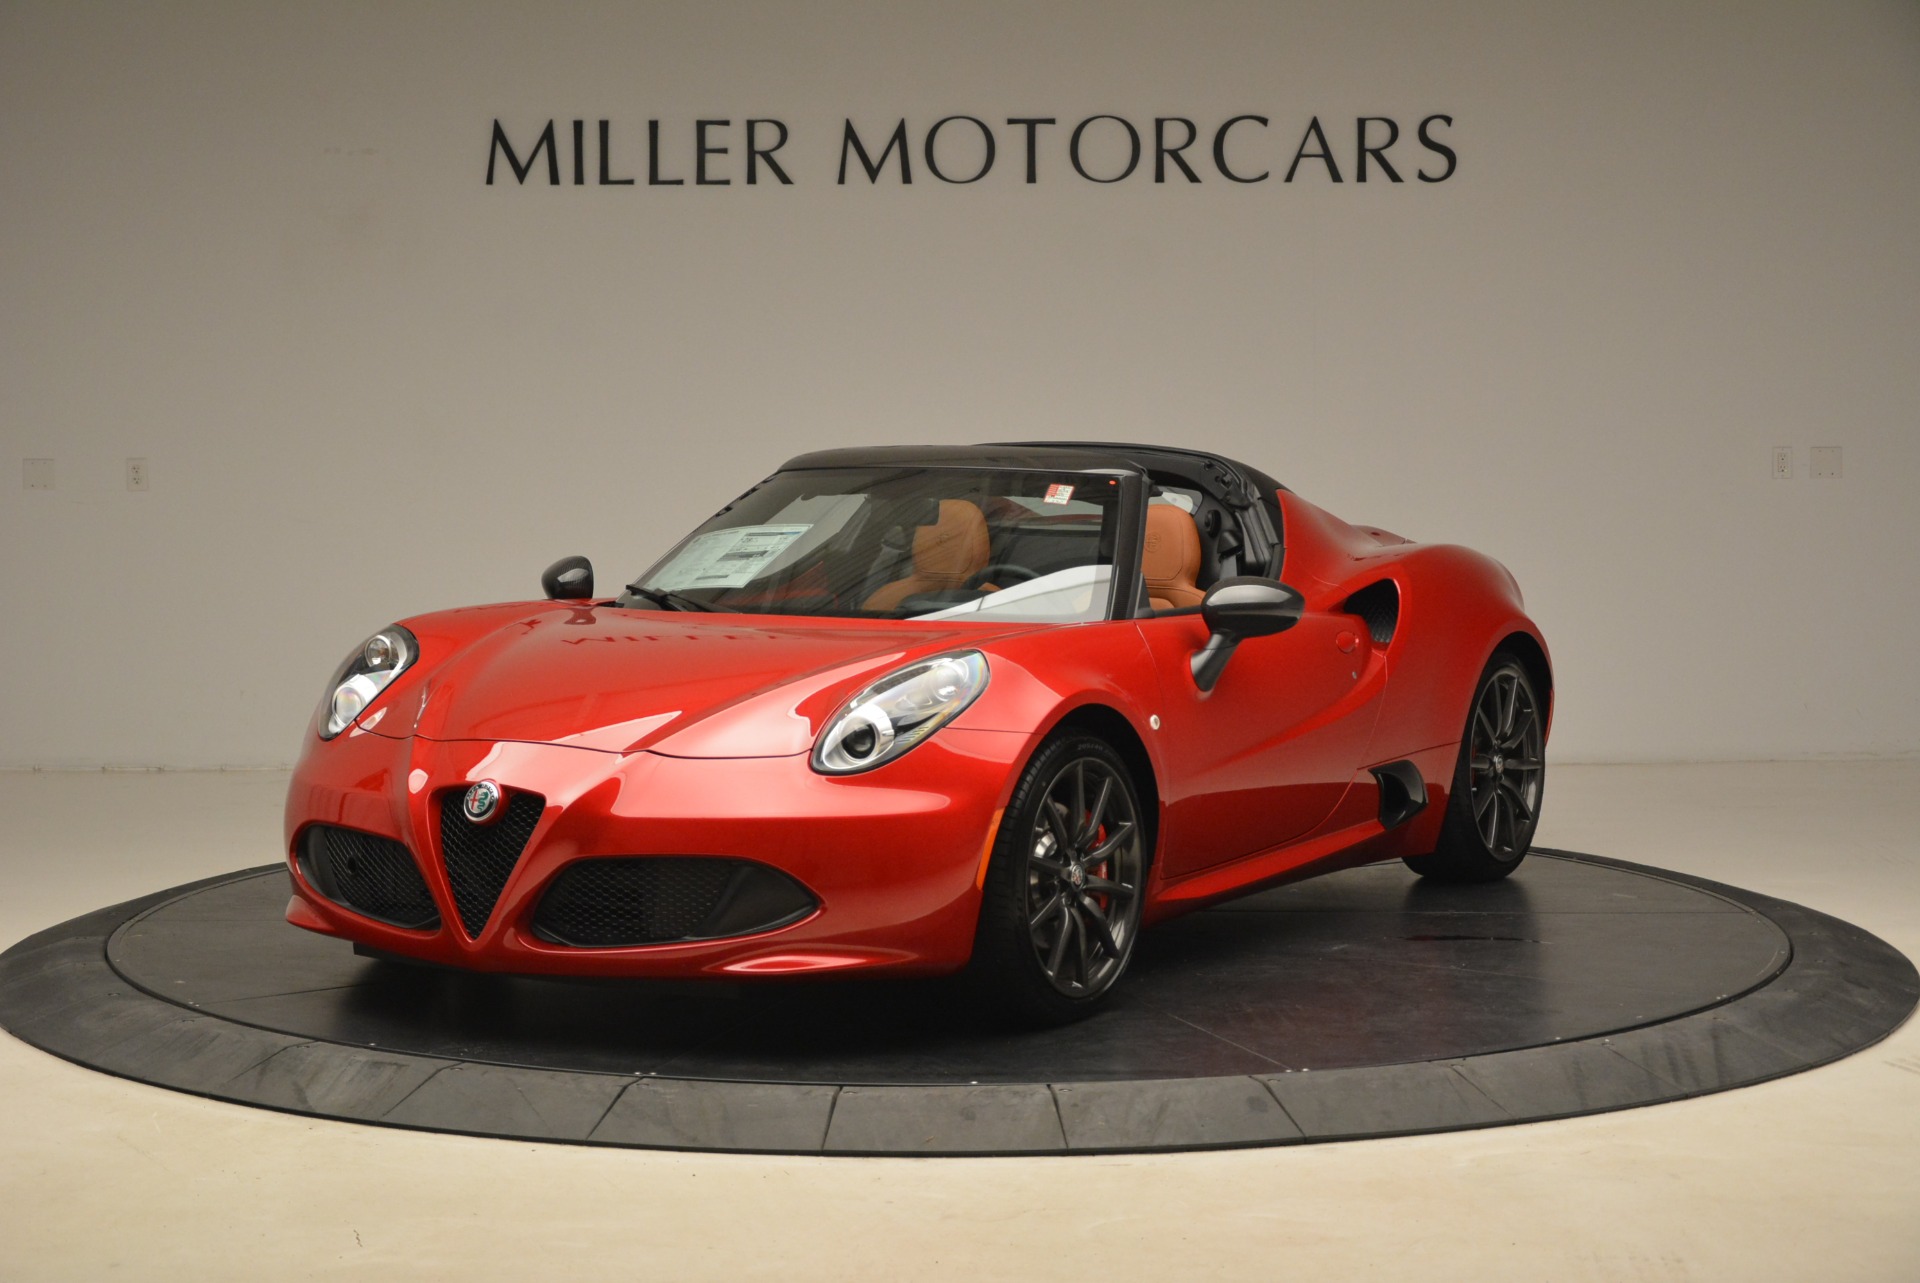 New 2018 Alfa Romeo 4c Spider For Sale Miller Motorcars